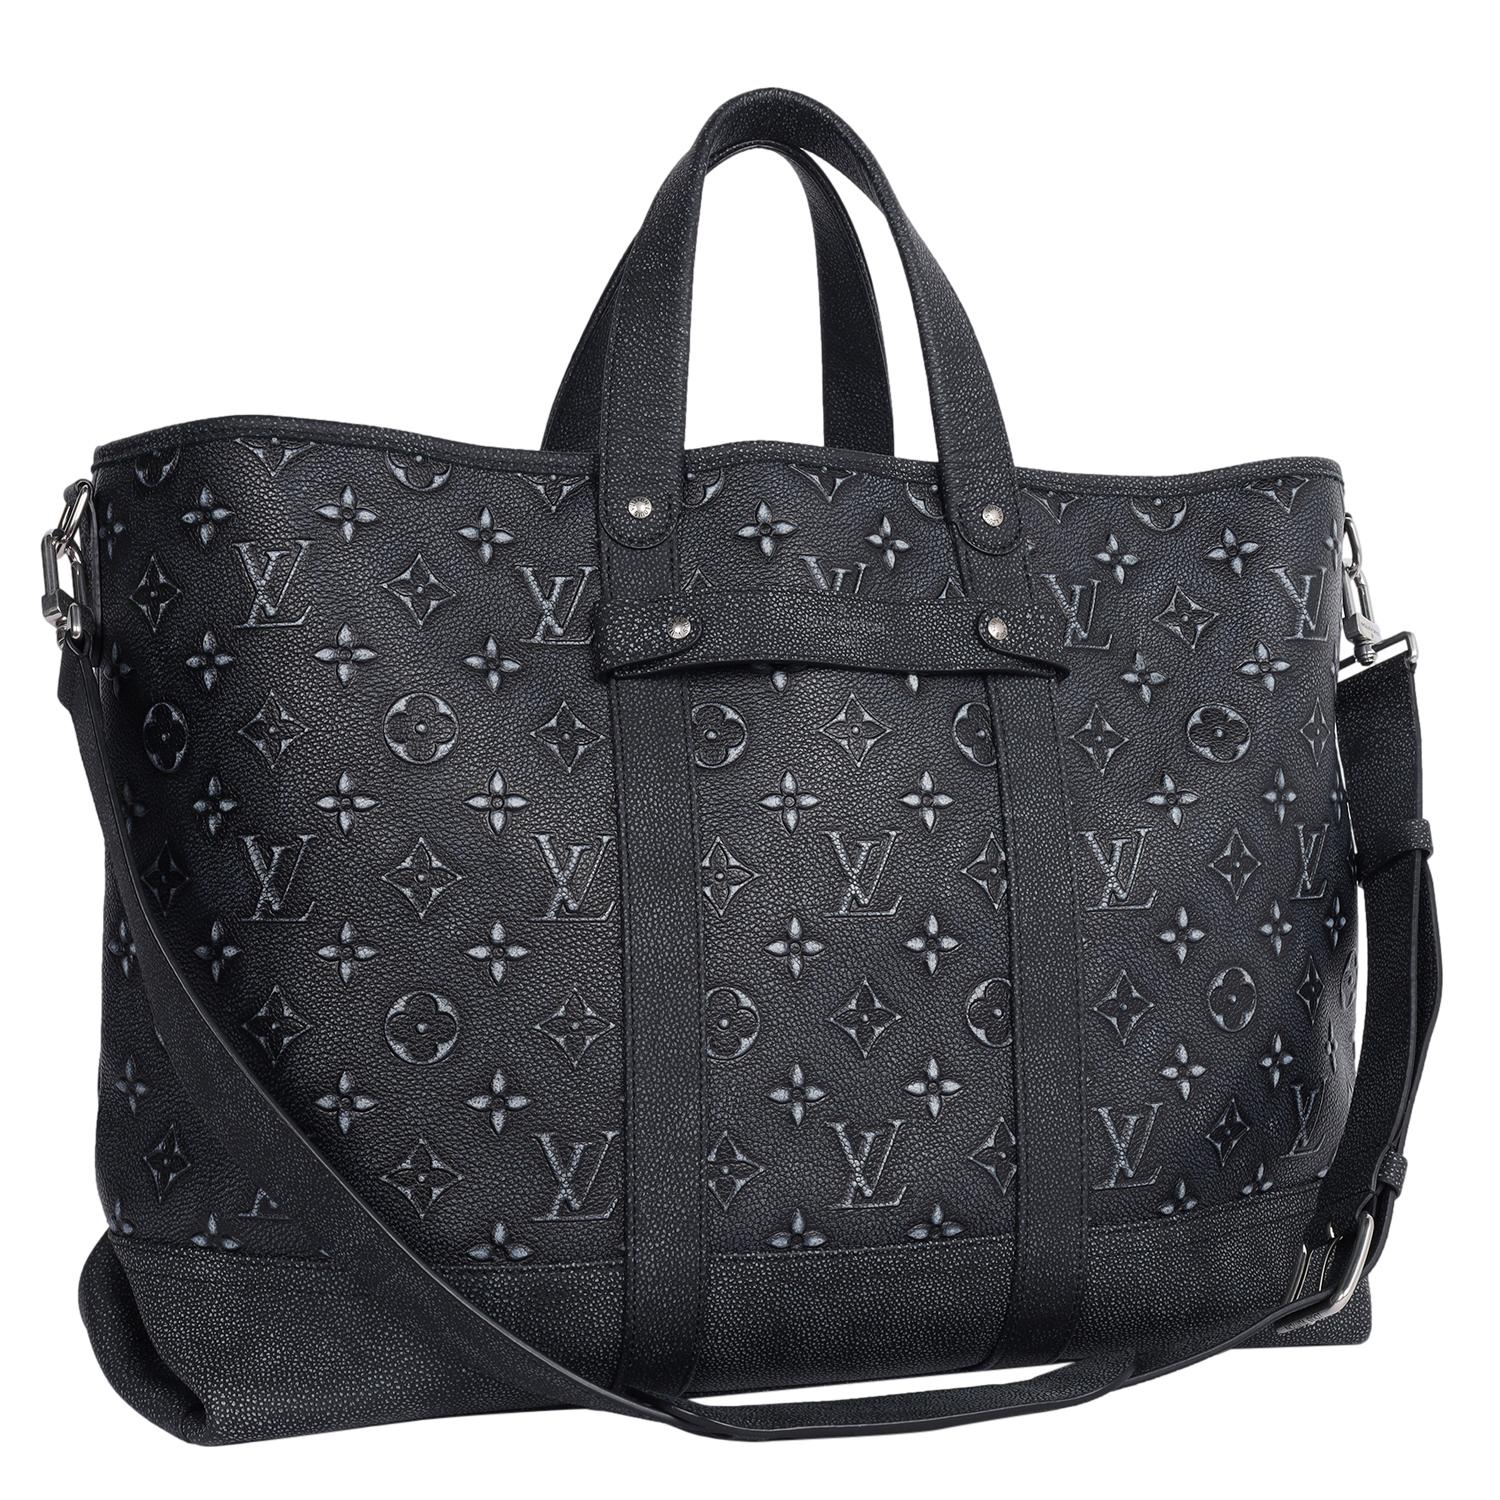 Louis Vuitton Black Monogram Leather Journey Tote Shoulder Bag For Sale 7